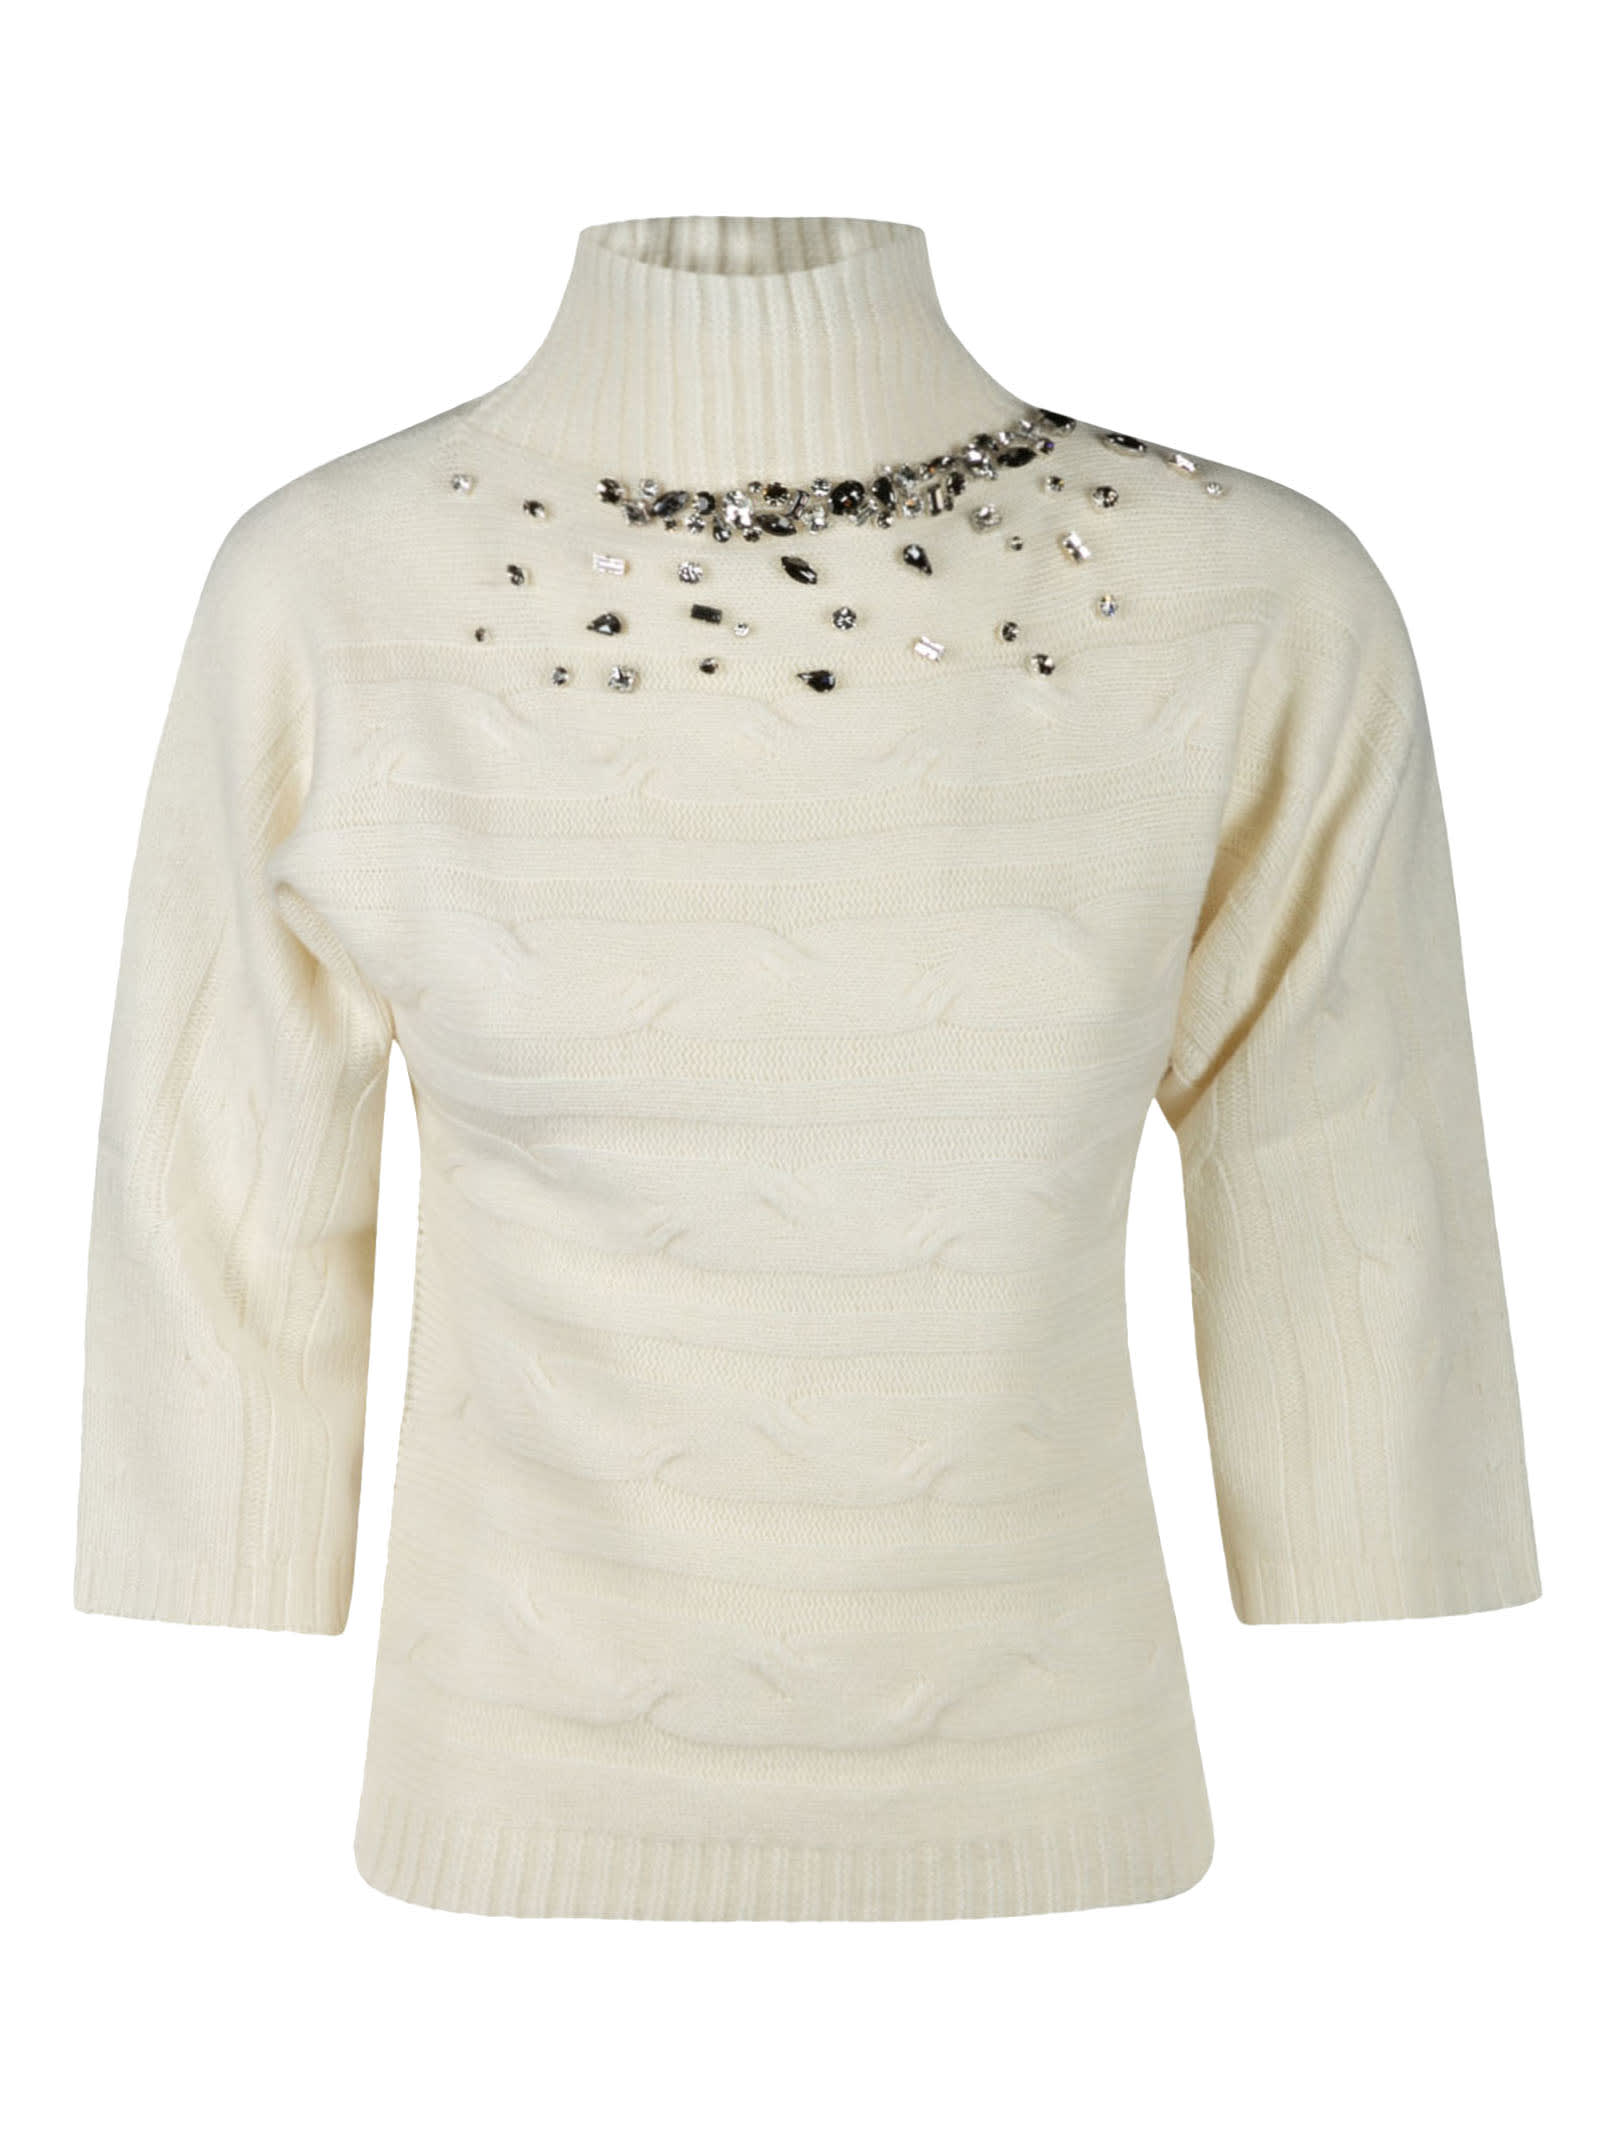 Anna Molinari Crystal Embellished Turtleneck Sweater